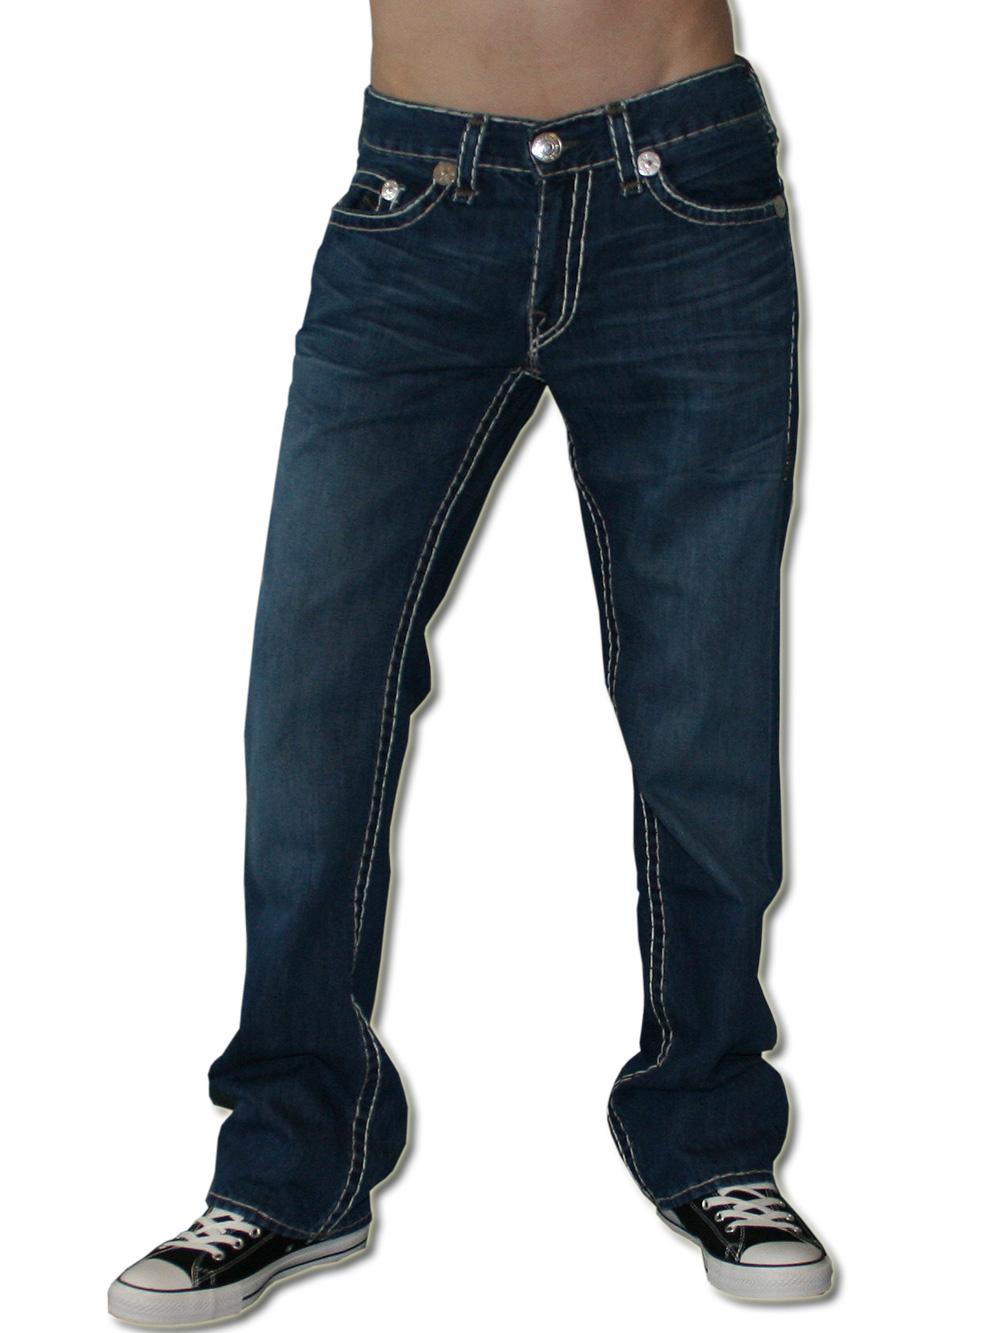 bobby super t true religion jeans